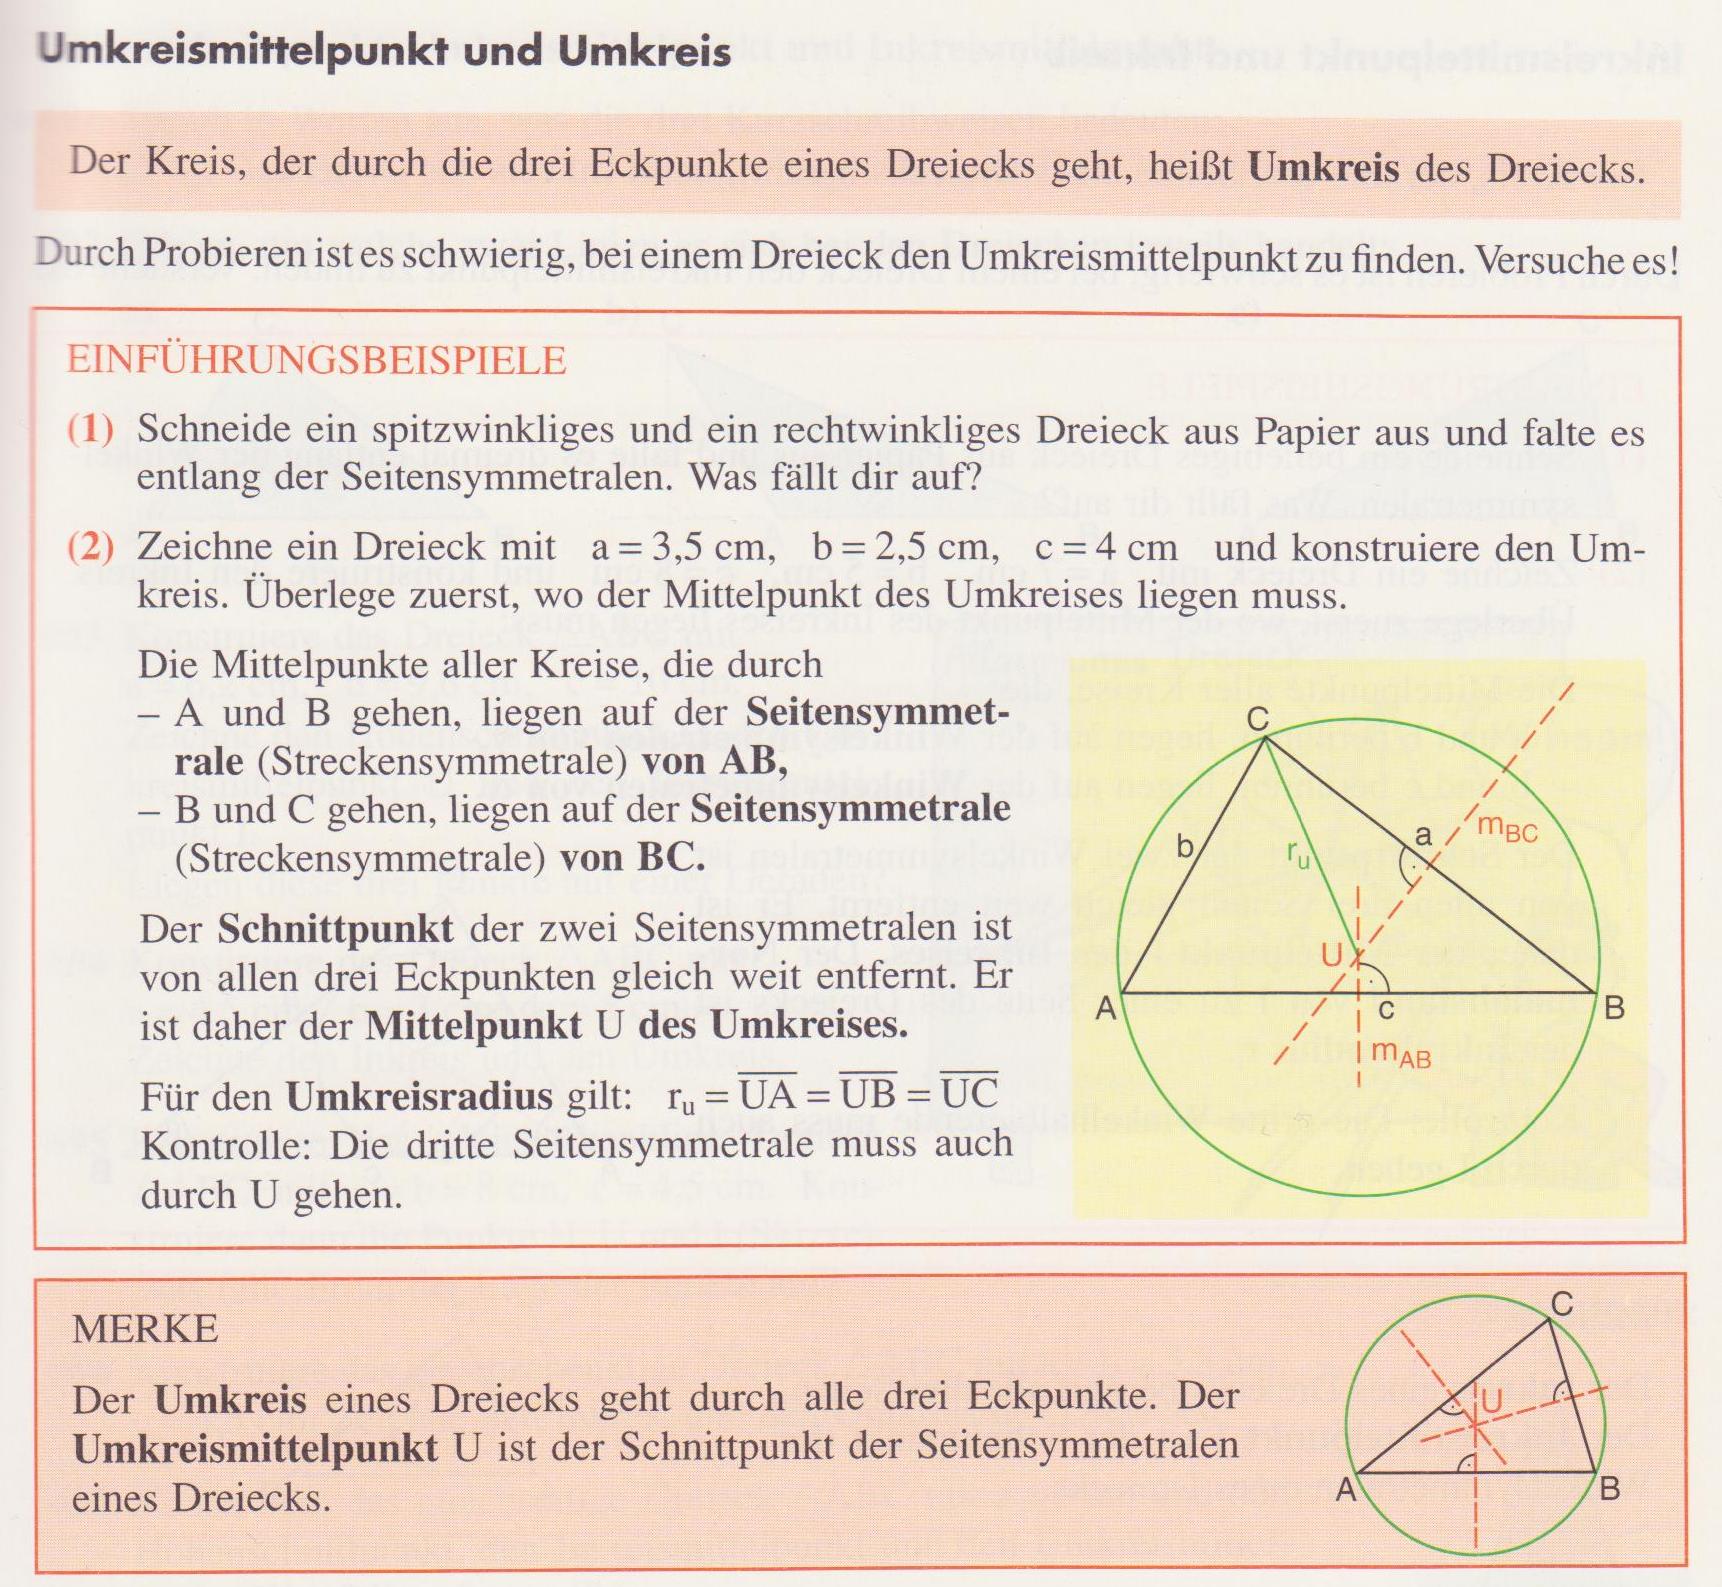 Dreieck - Lernpfad